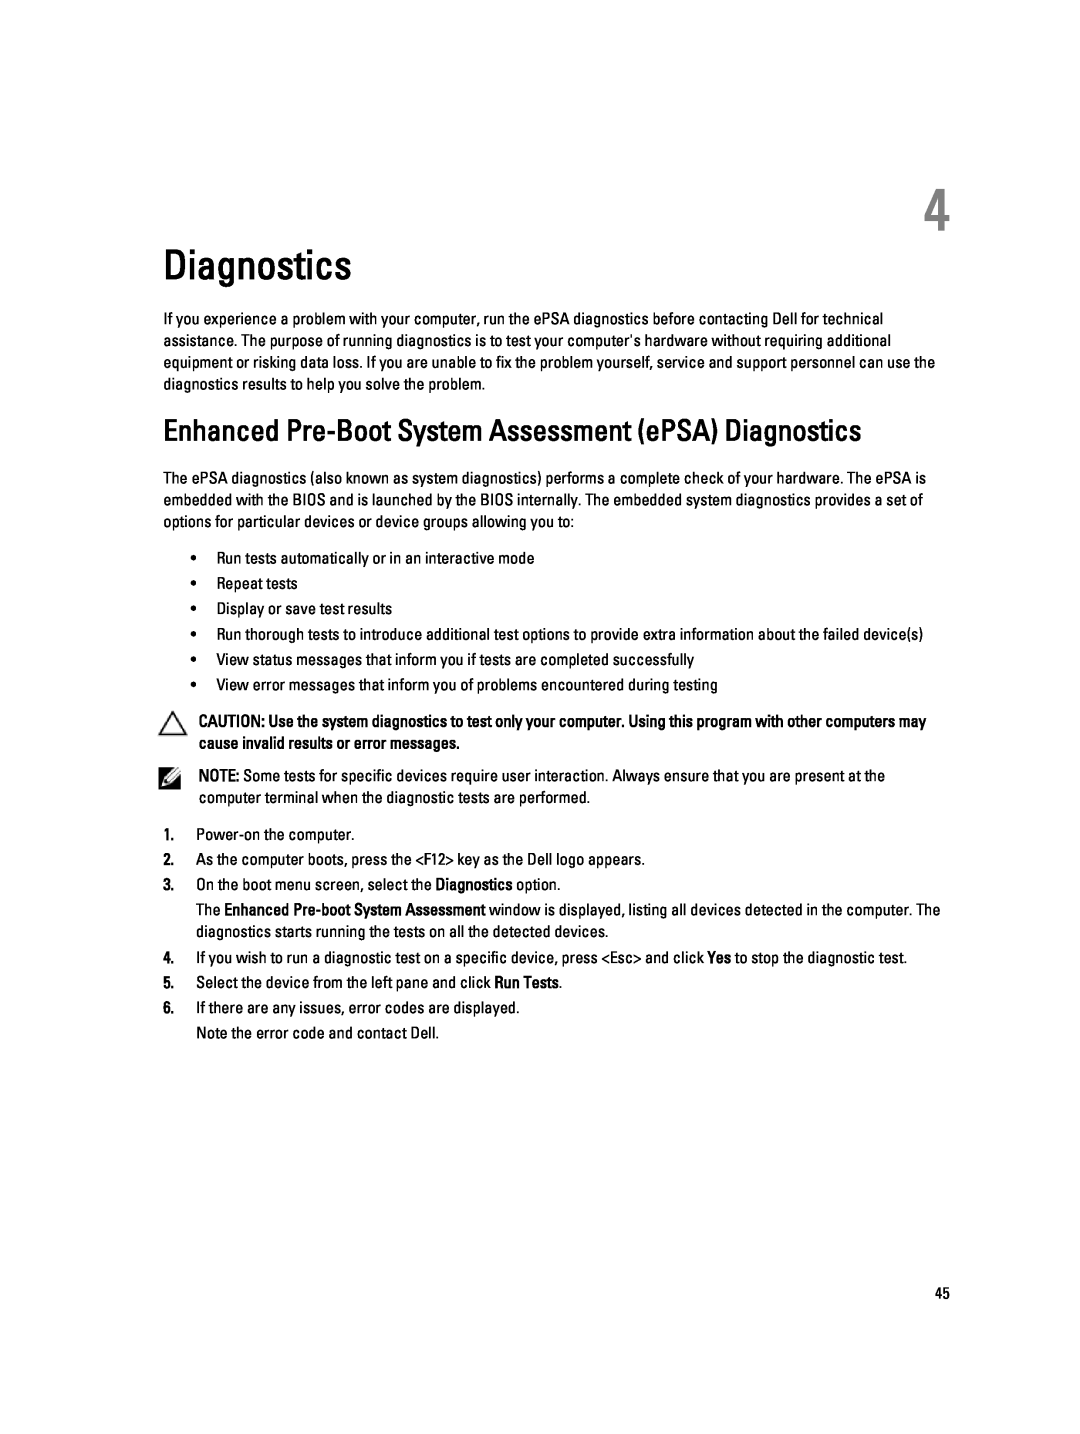 Dell T1700 owner manual Enhanced Pre-Boot System Assessment ePSA Diagnostics 